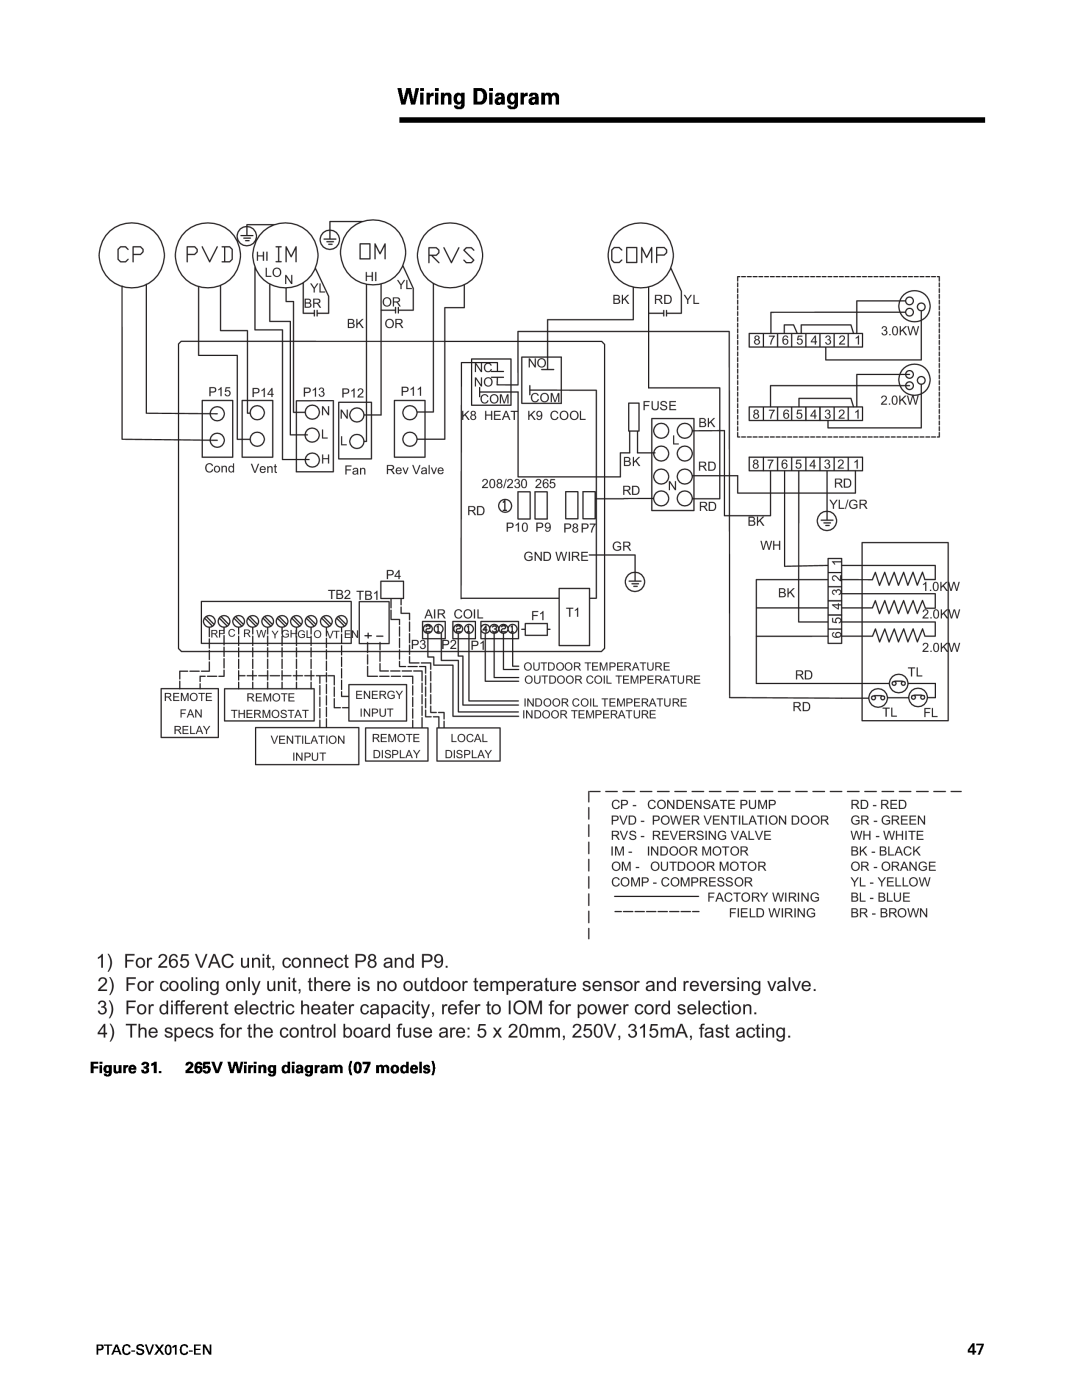 Trane PTAC-SVX01C-EN manual Wiring Diagram, 1For 265 VAC unit, connect P8 and P9 